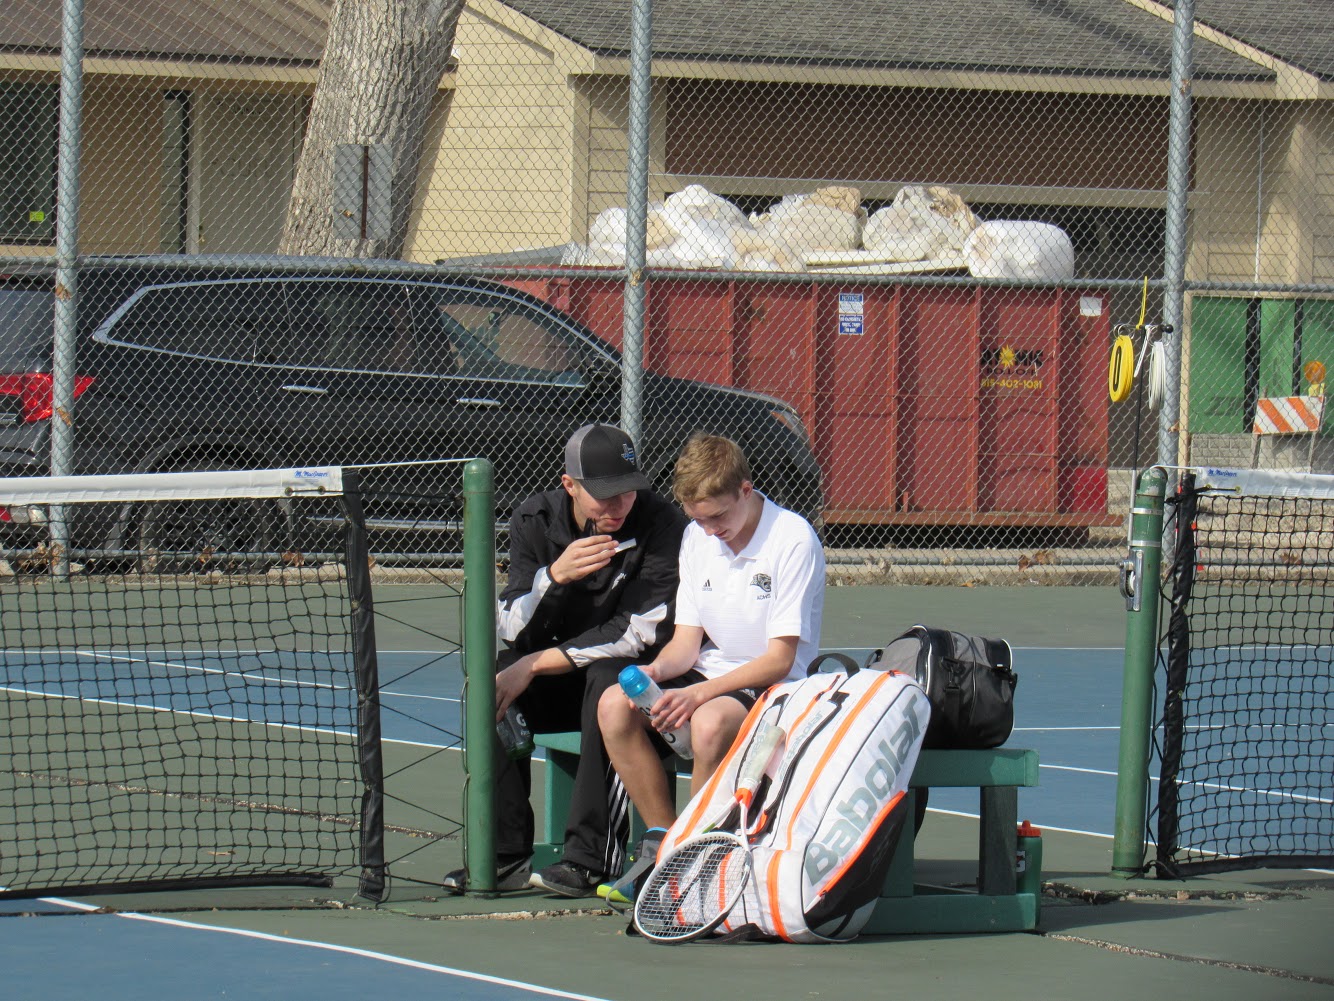 Grant T. teaches tennis lessons in Dallas, TX